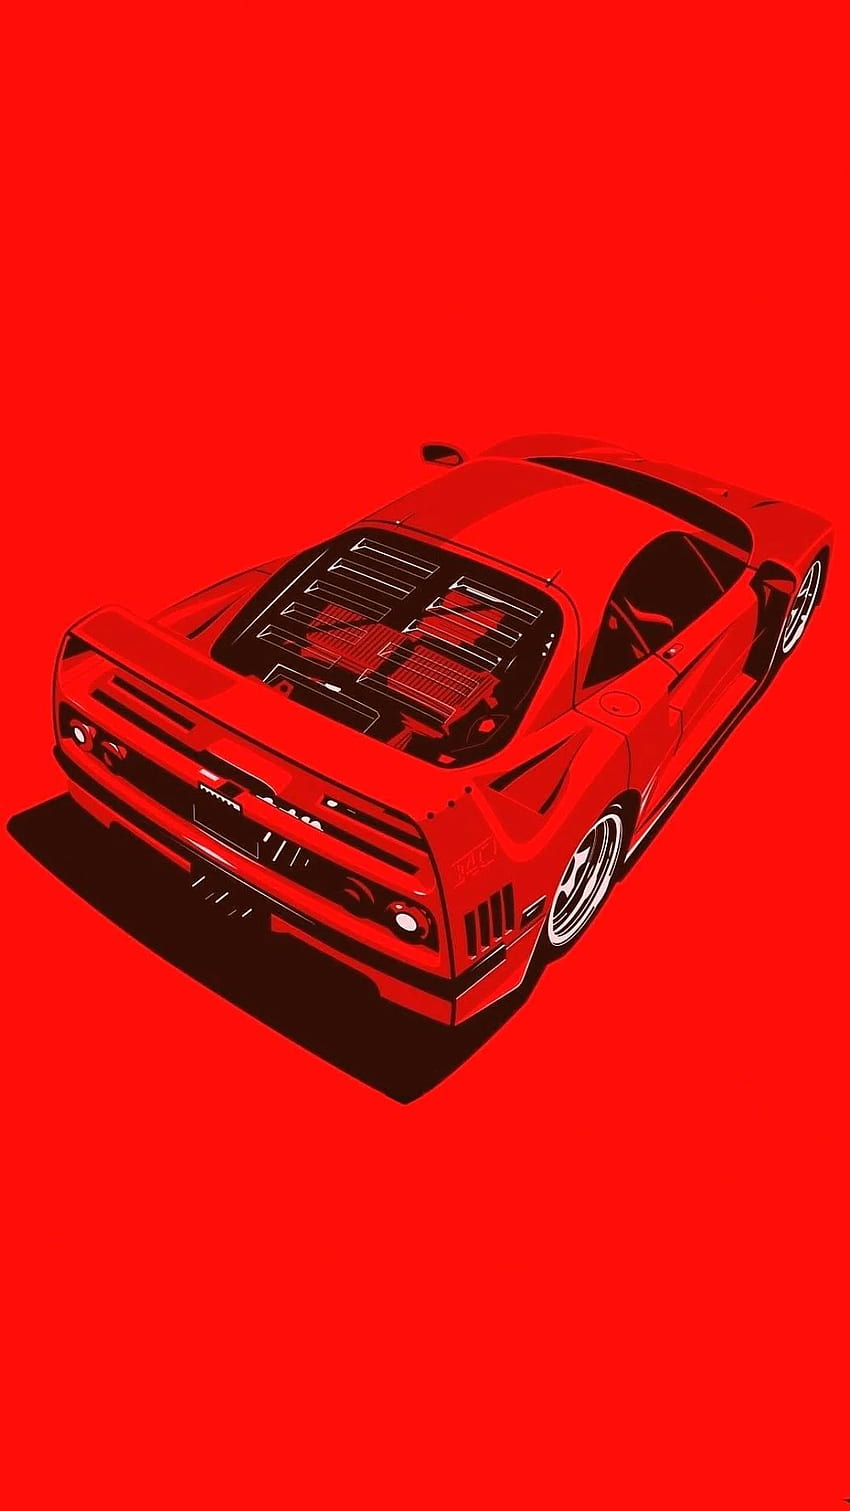 Premium Photo | Sport car wallpaper 3d render illustration images